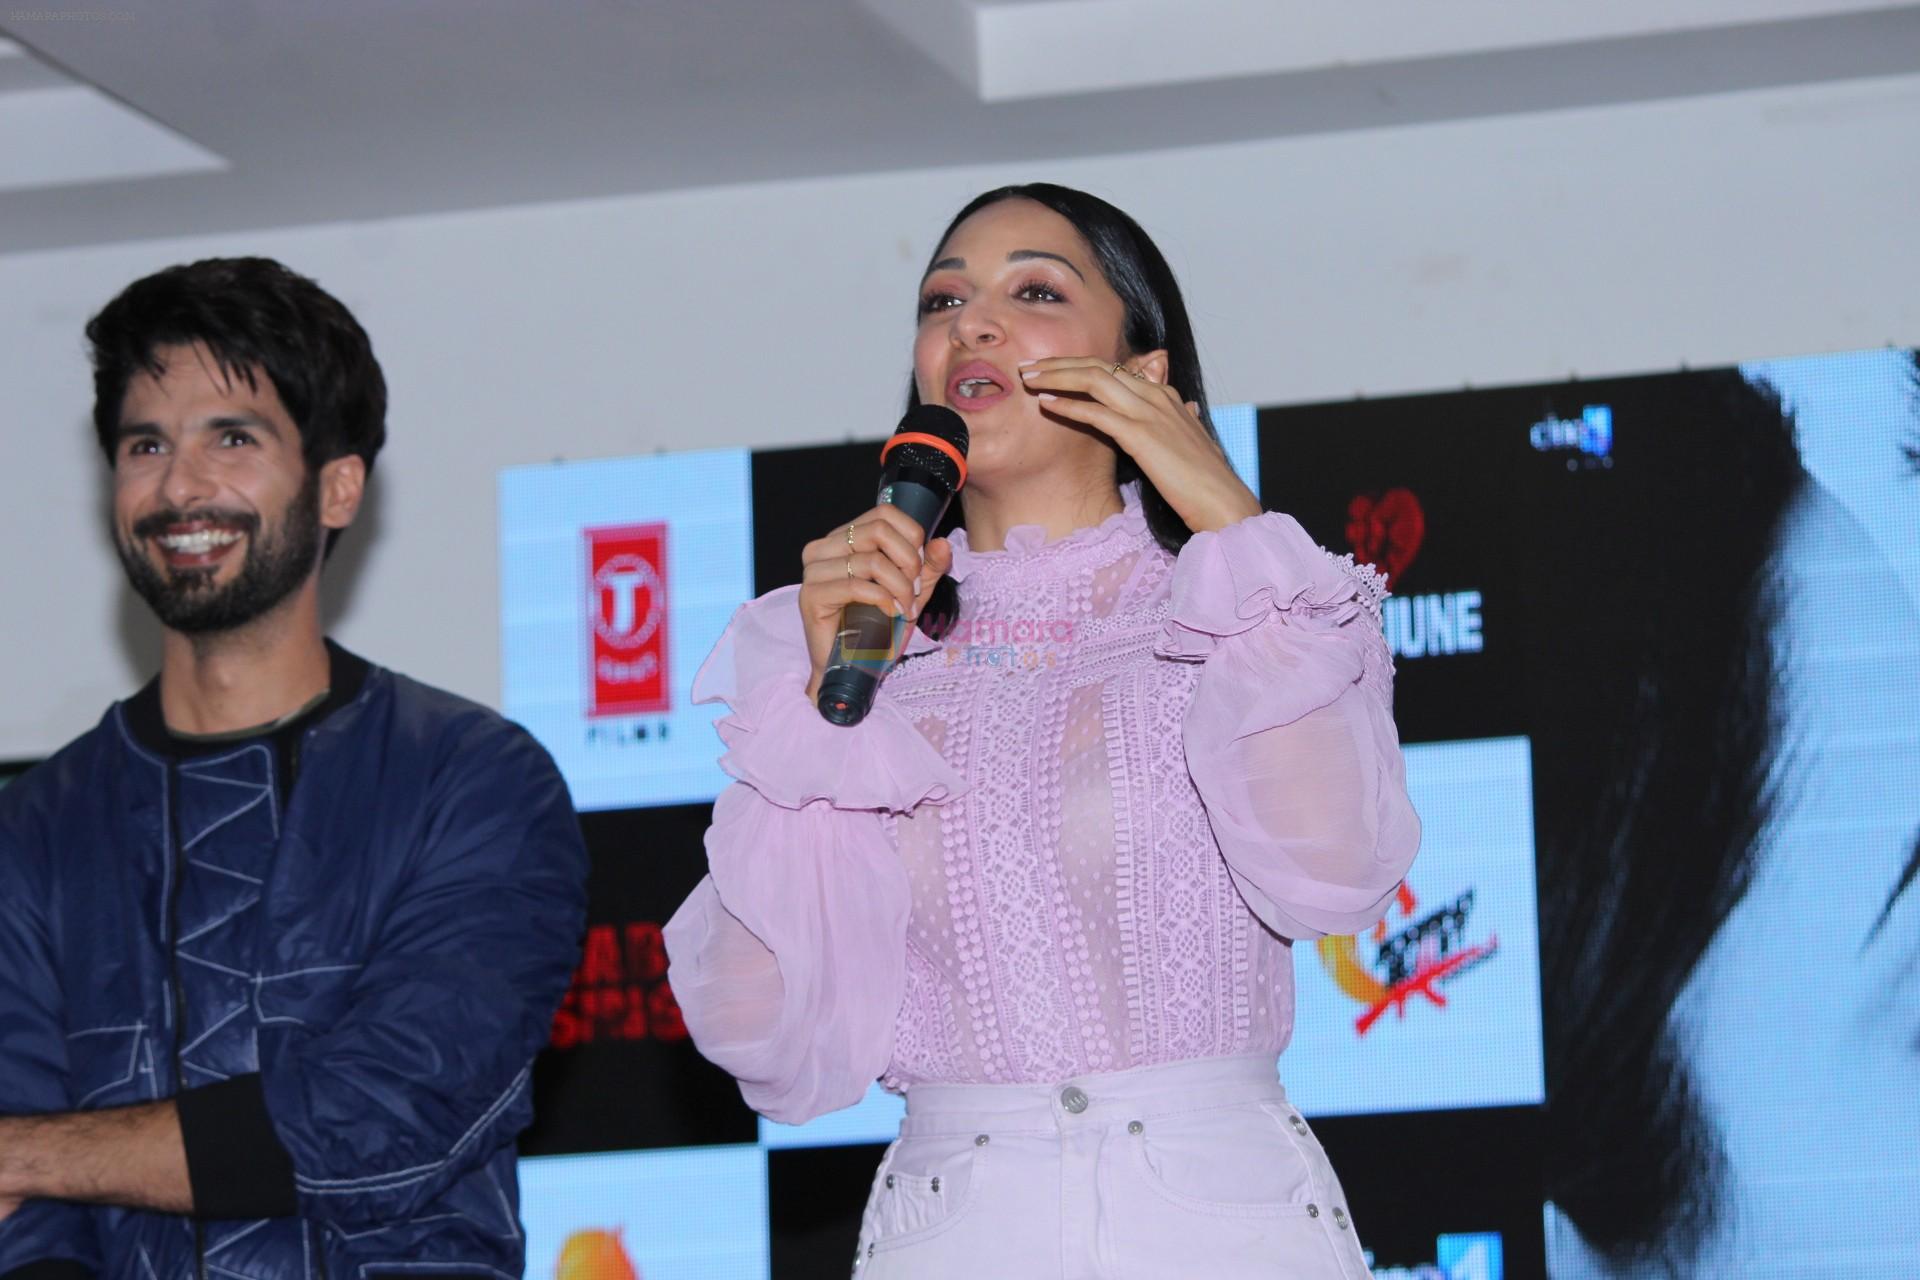 Shahid Kapoor & Kiara Advani at the song launch of Kabir Singh on 6th June 2019